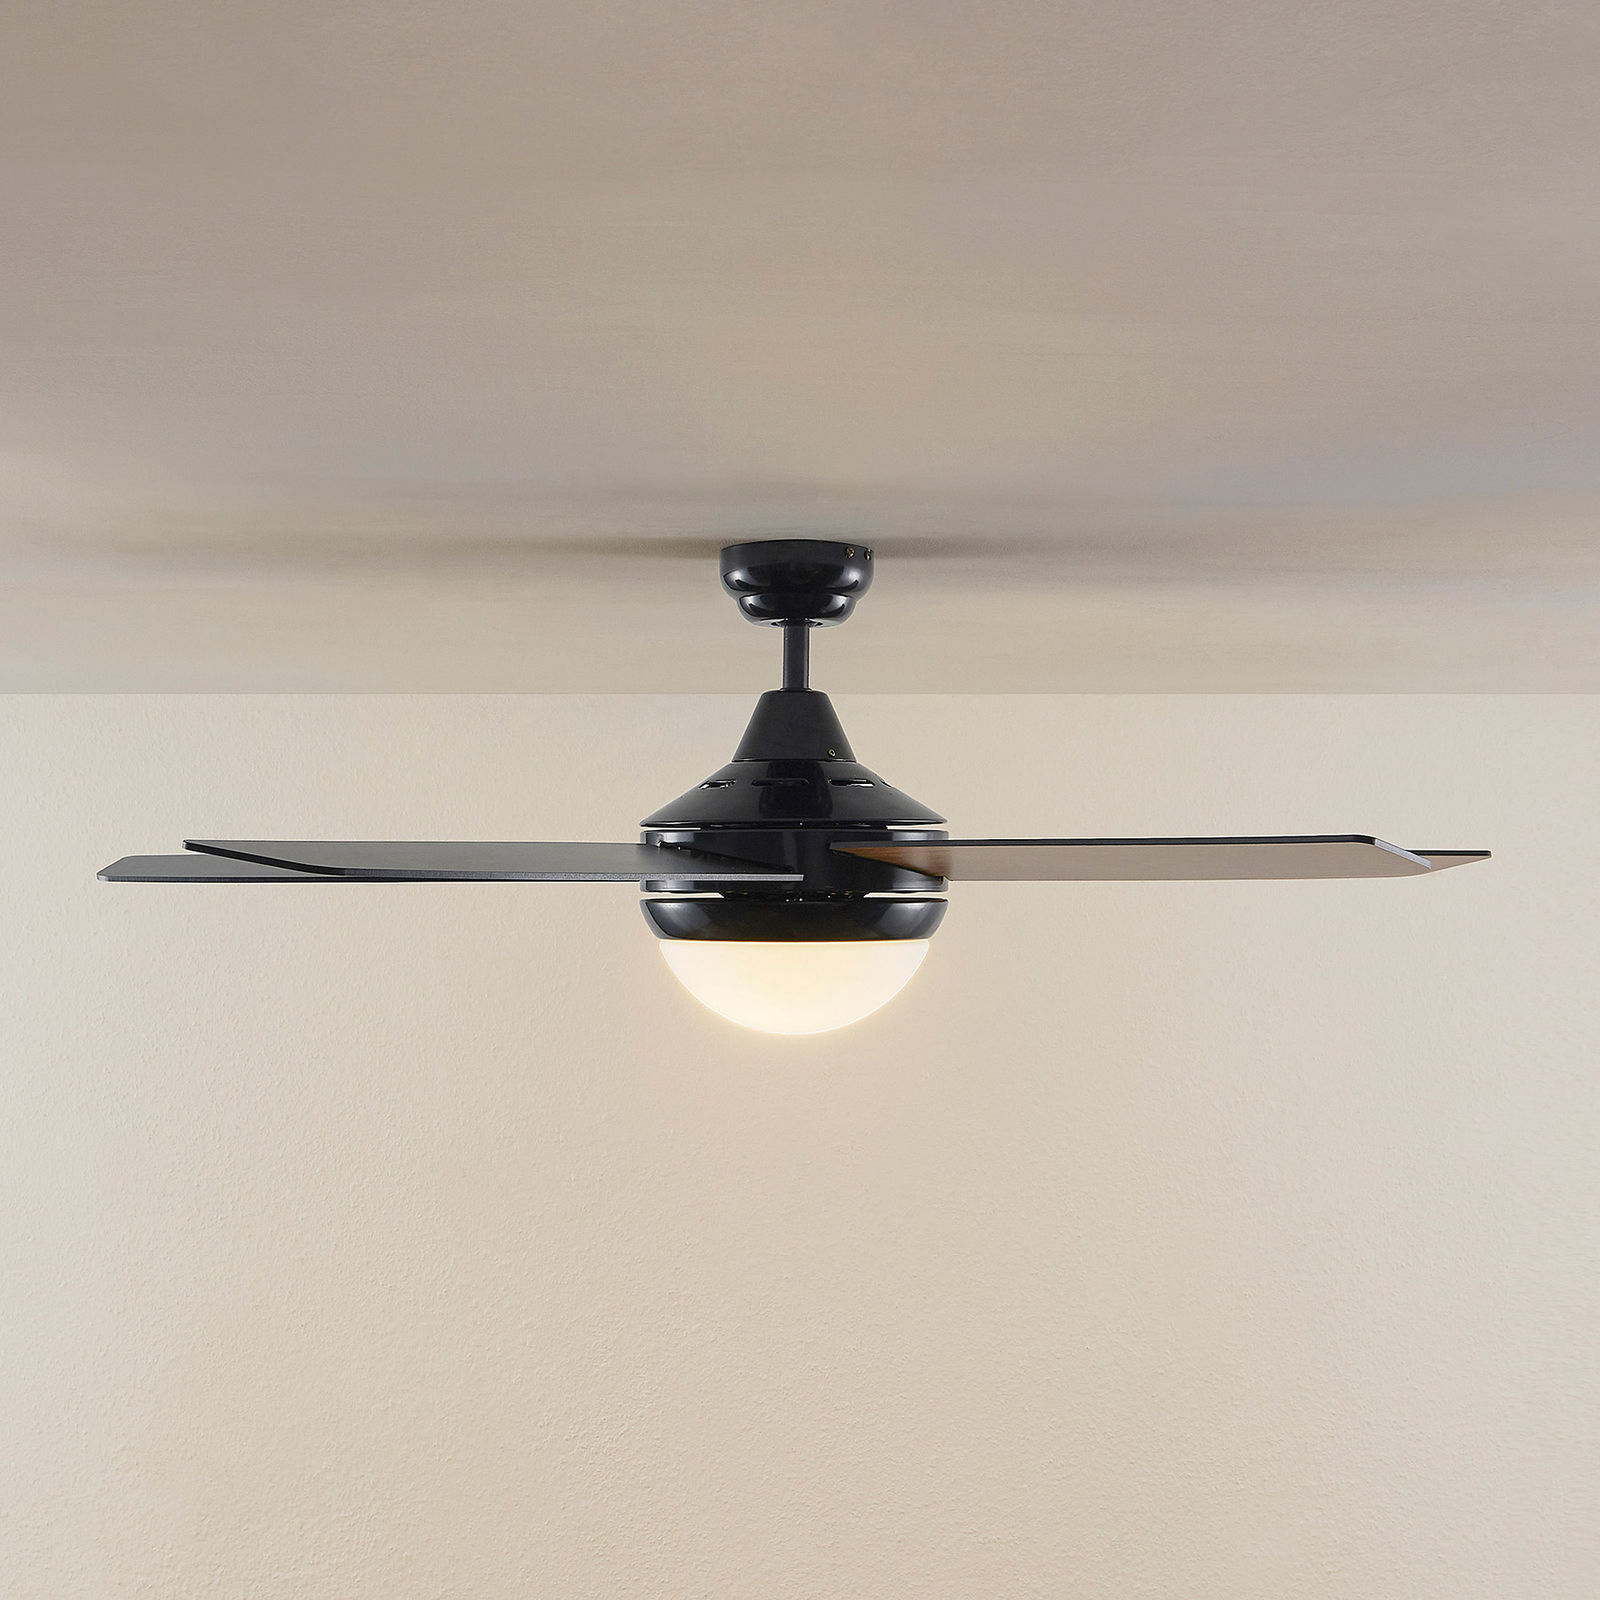 Starluna Auraya ceiling fan black/oak